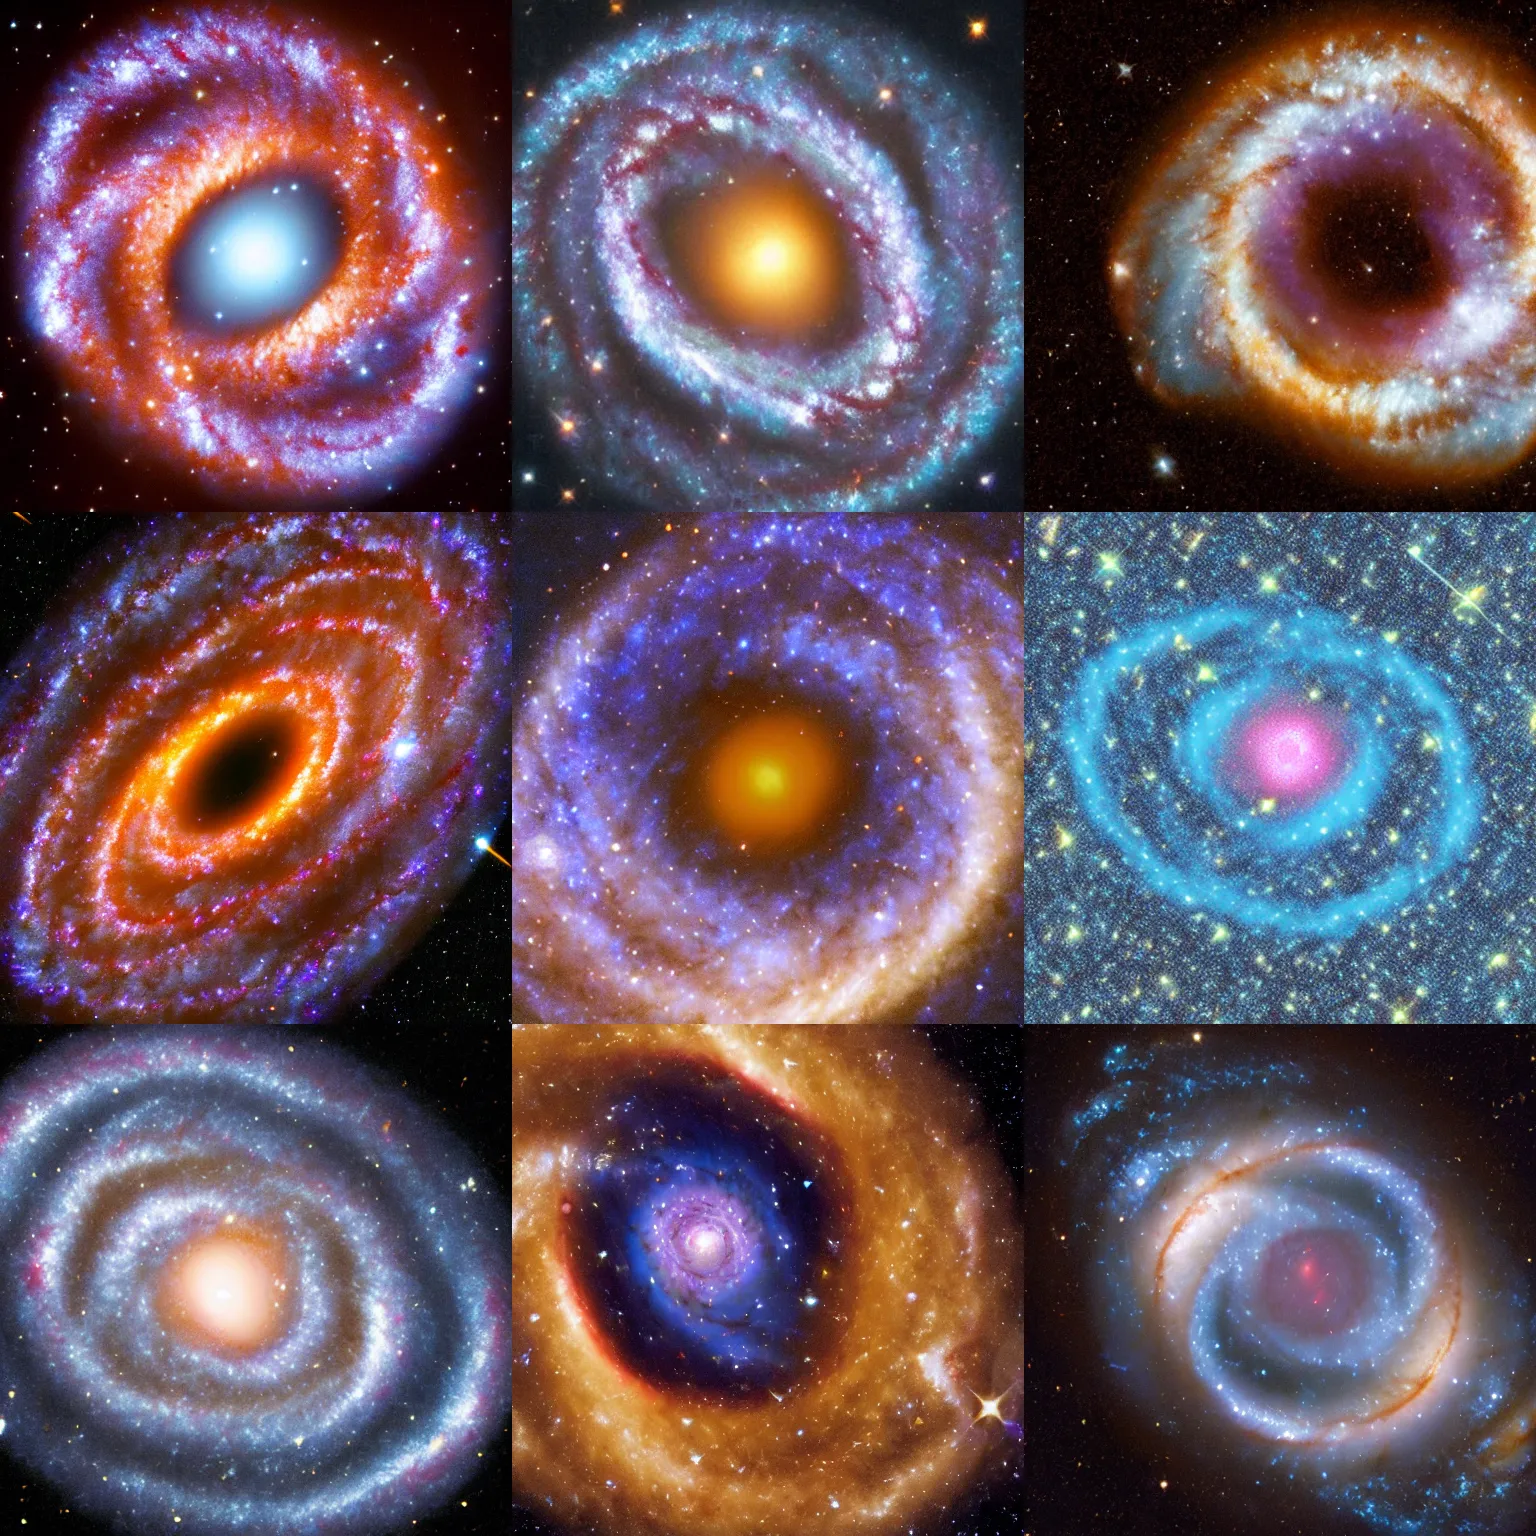 Prompt: The Cartwheel Galaxy Is the Webb Telescope’s Latest Cosmic Snapshot